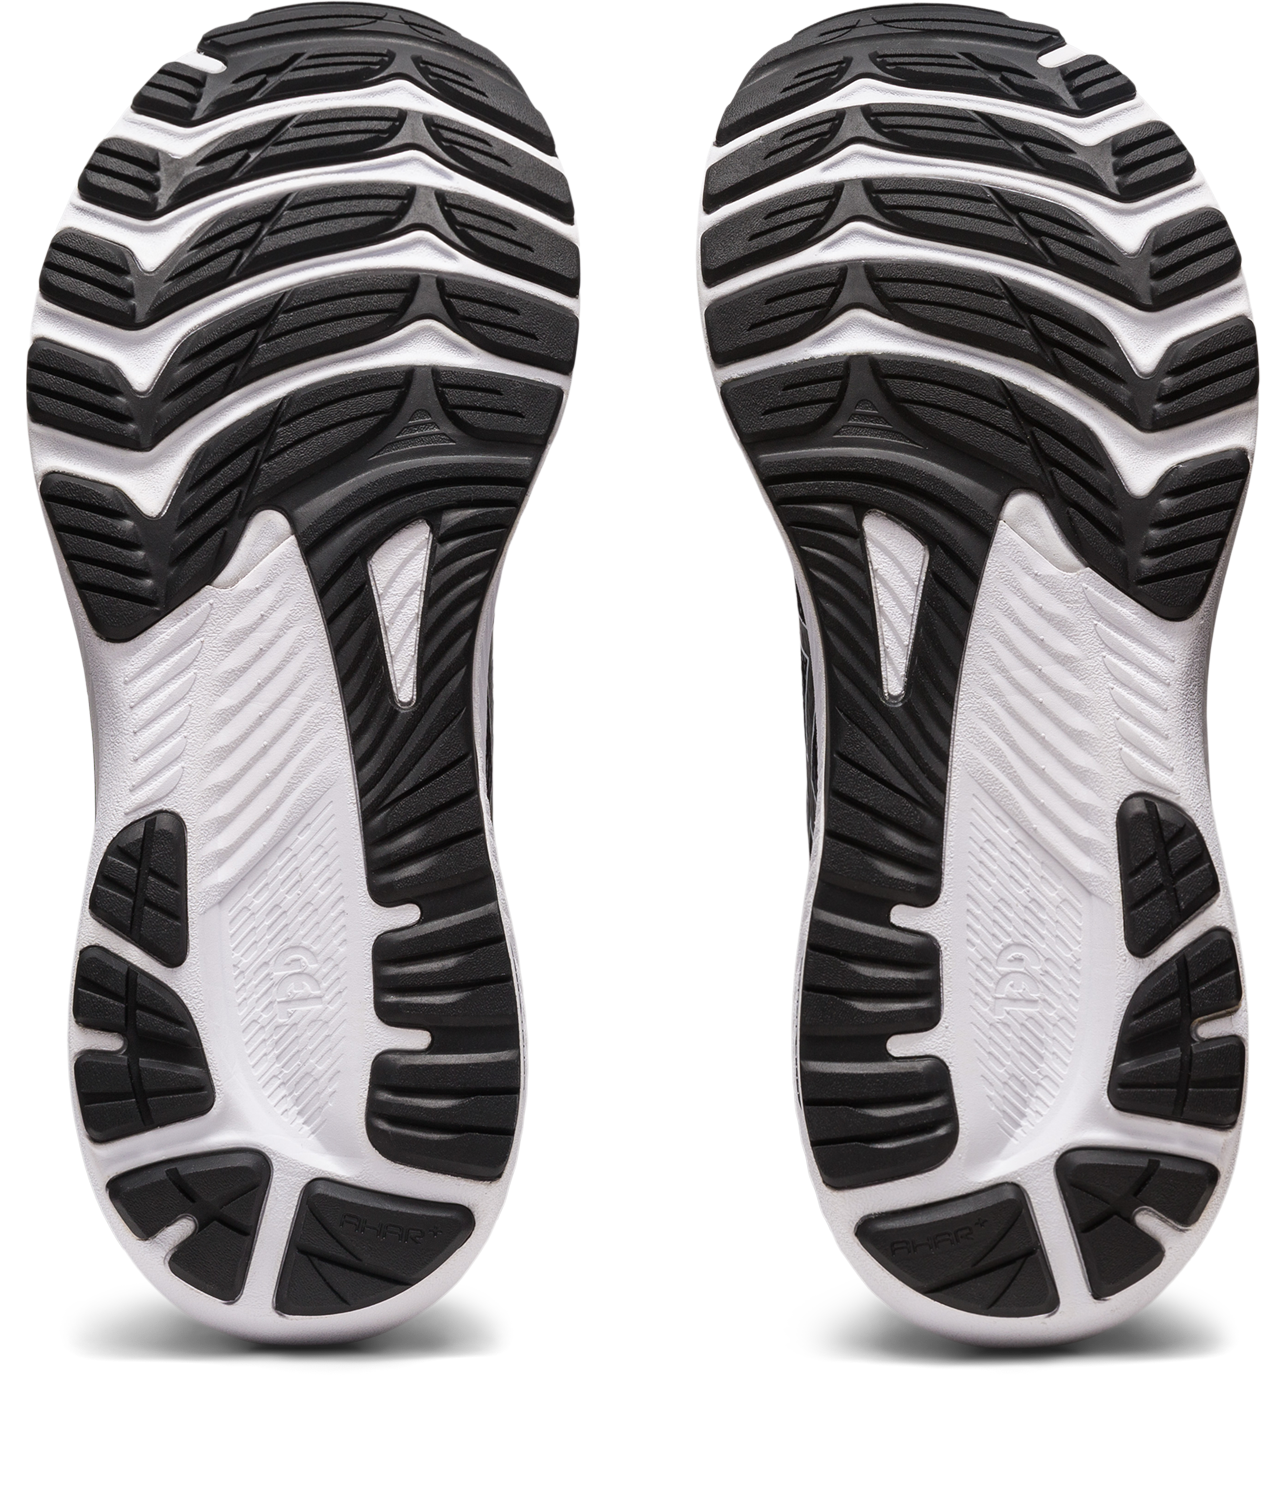 Asics Women's Gel-Kayano 29 Wide D-Width Running Shoes in Black/White